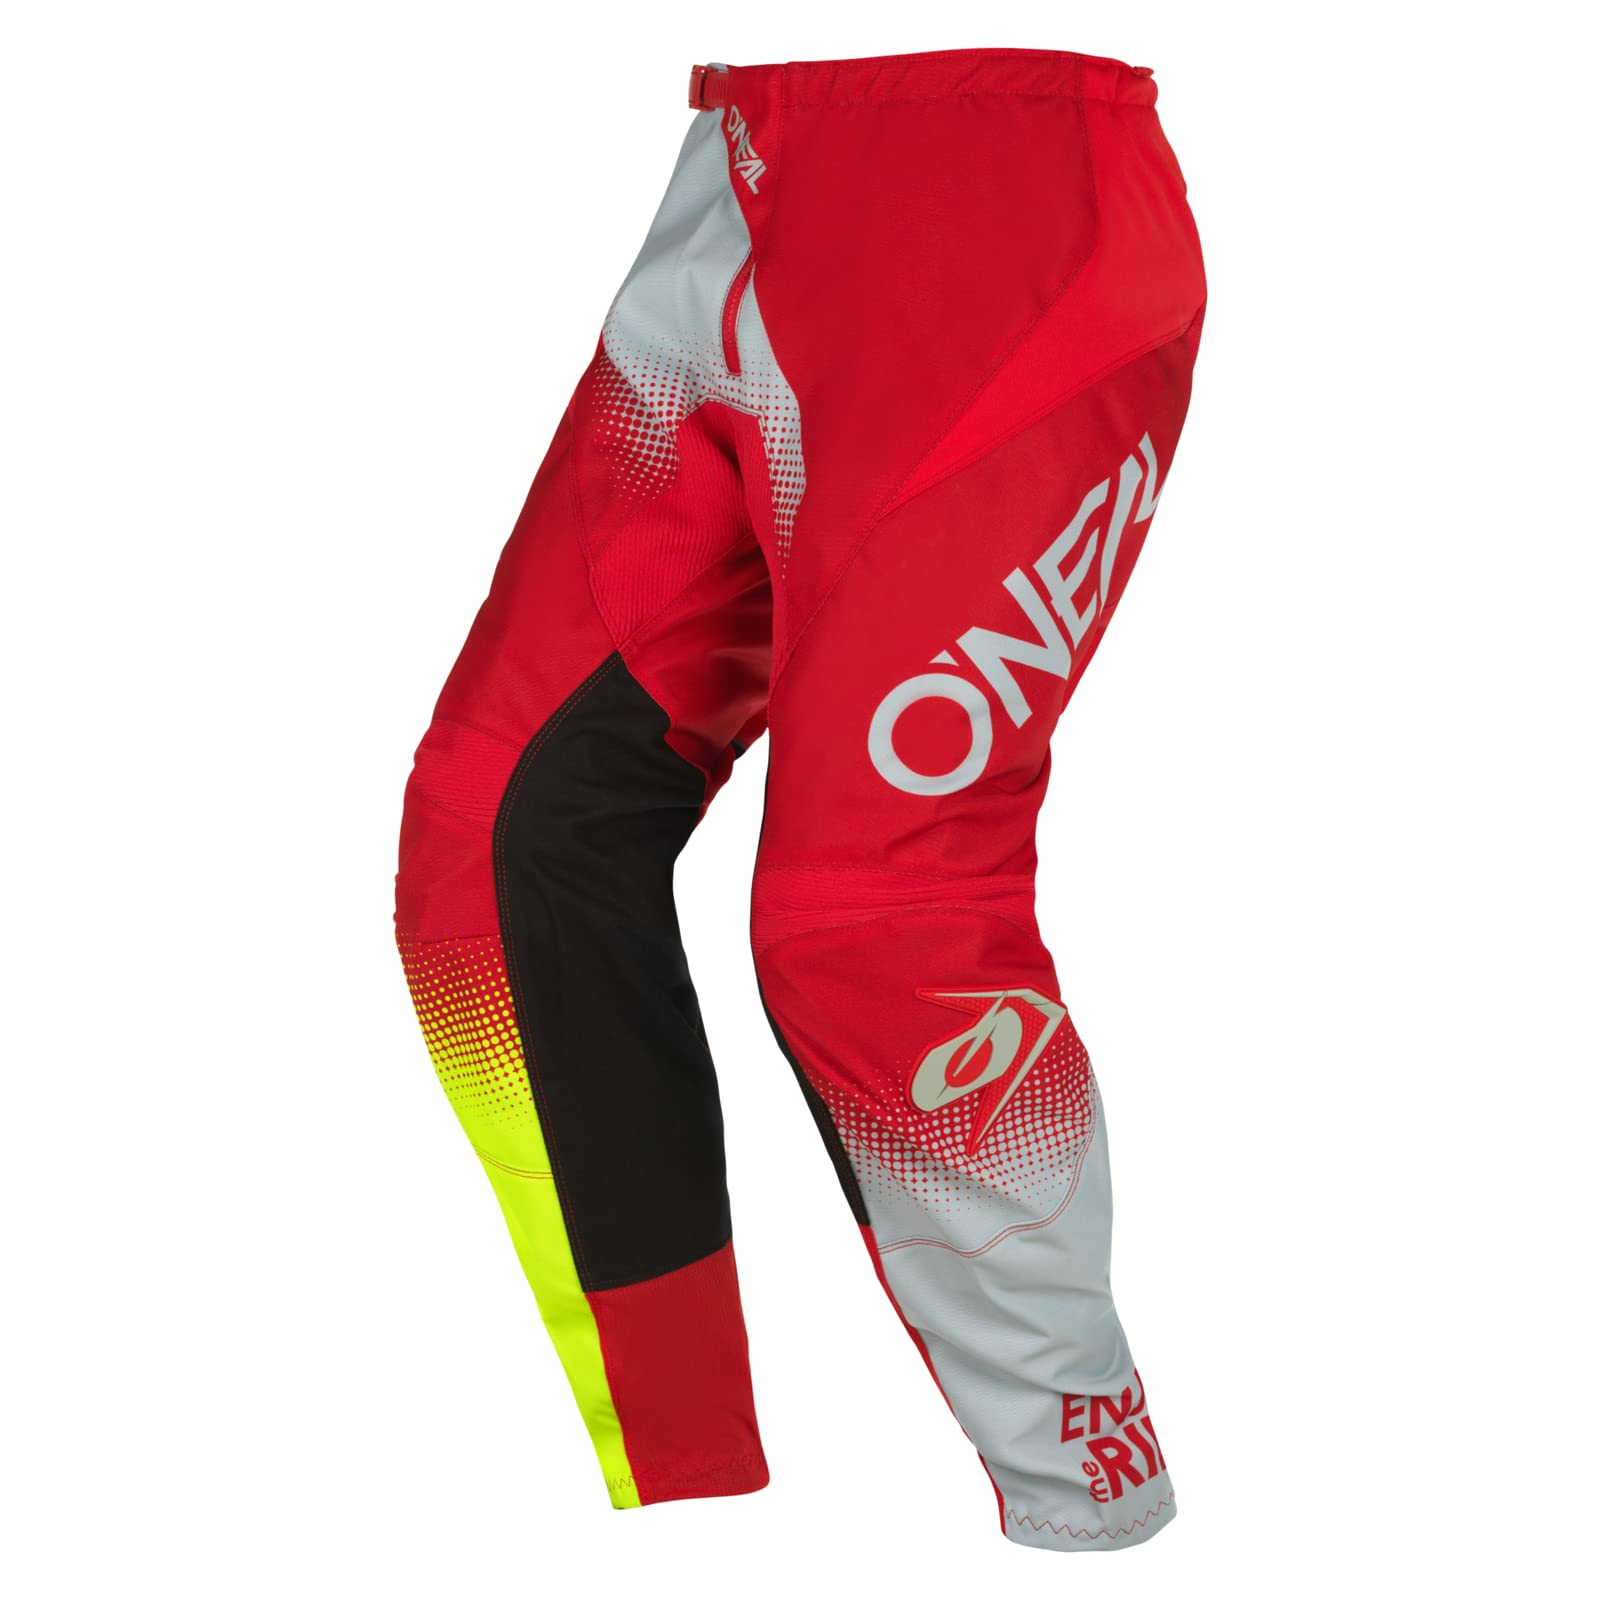 O'NEAL | Motocross-Hose | Enduro MX | Maximale Bewegungsfreiheit, Leichtes, Atmungsaktives und langlebiges Design | Pants Element Racewear V.22 | Erwachsene | Rot Grau Neon-Gelb | Größe 34/50